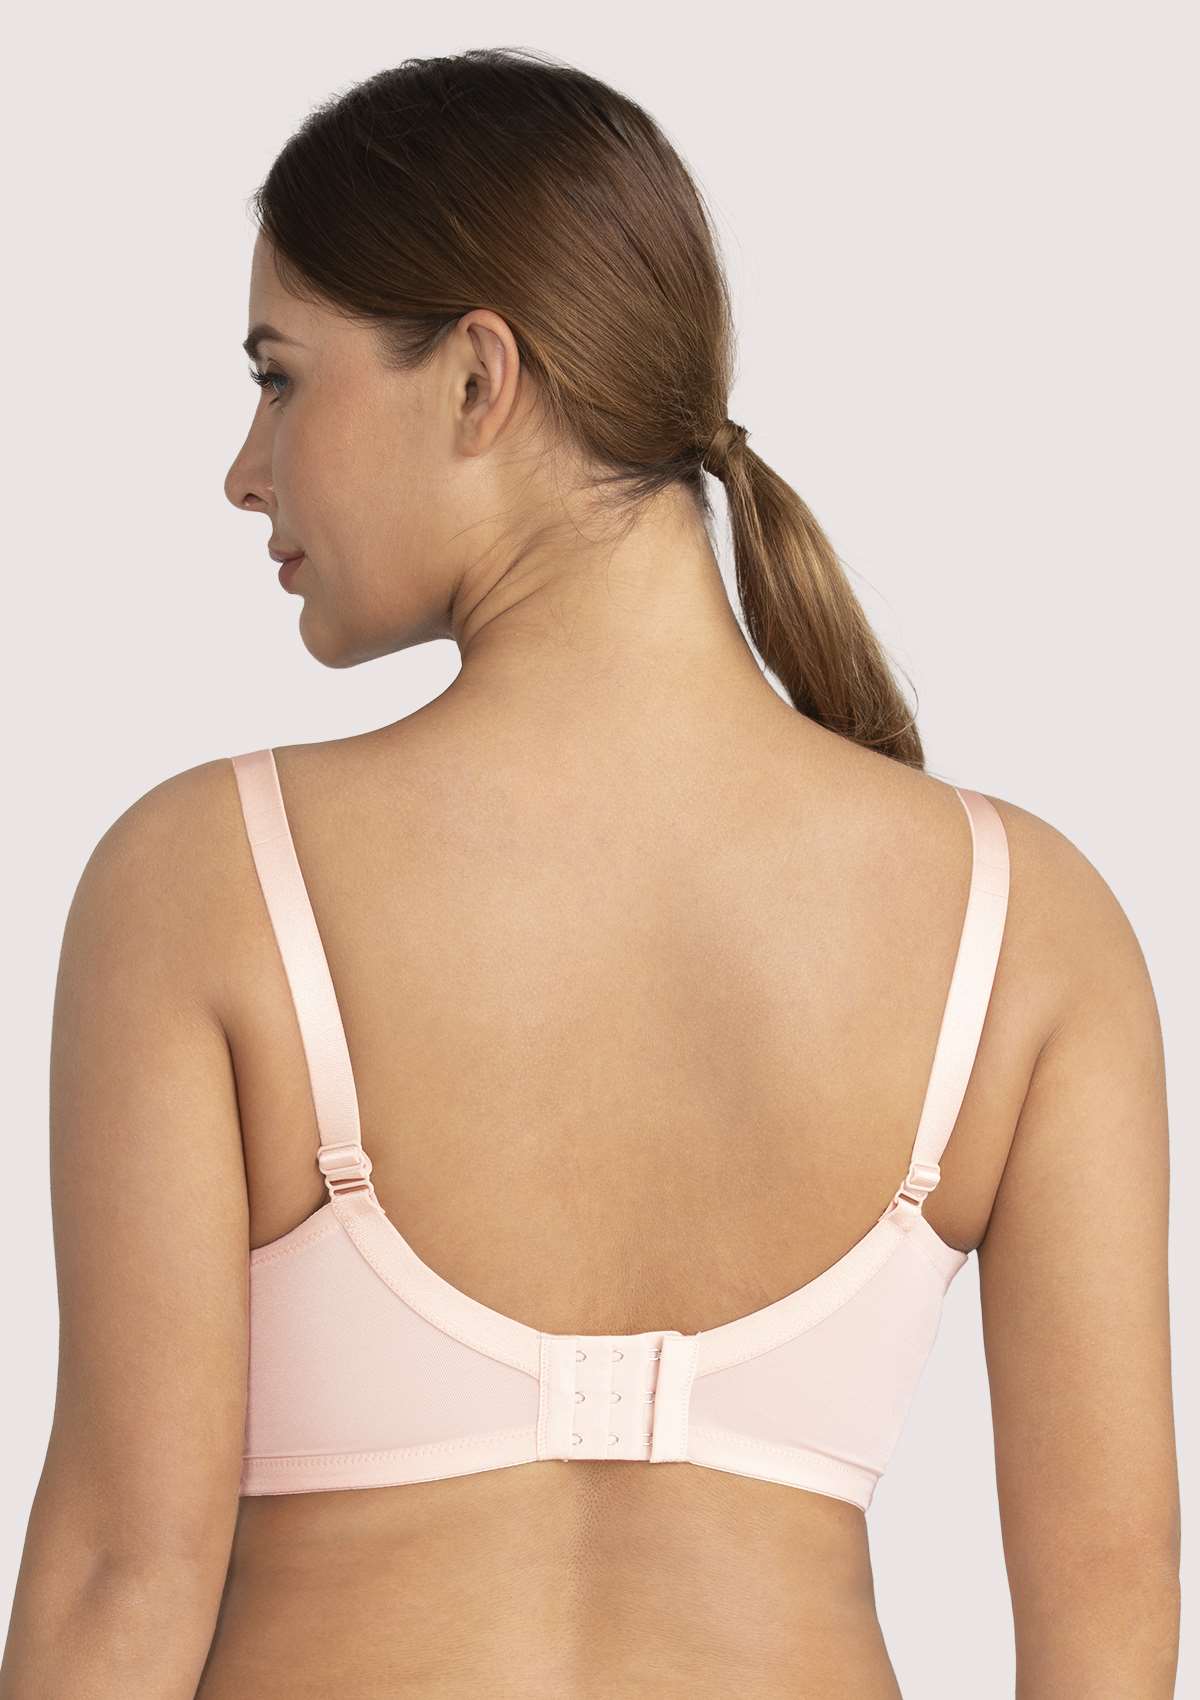 HSIA Sunflower Matching Bra And Panties Set: Comfortable Plus Size Bra - Pink / 38 / D